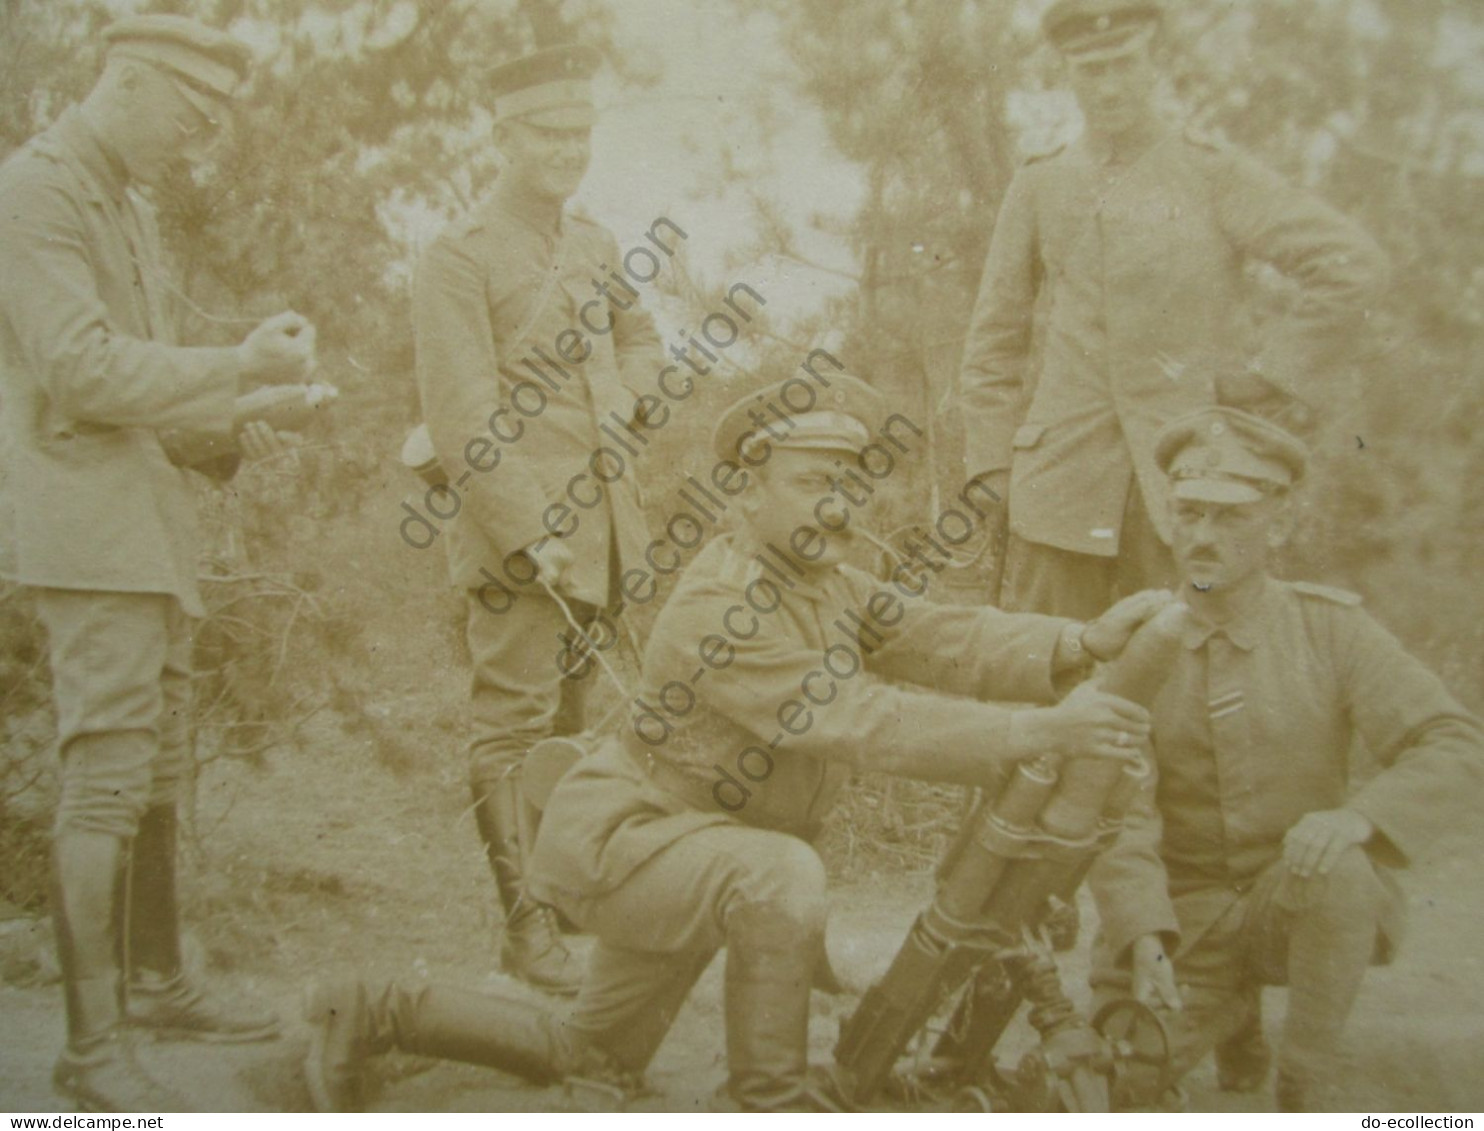 FRANCE Photos VALENCIENNES Soldats Allemands 1917 (59 Nord) Char Anglais, Bataille Somme 1918 Photo Guerre 1914-1918 WW1 - Guerra, Militari